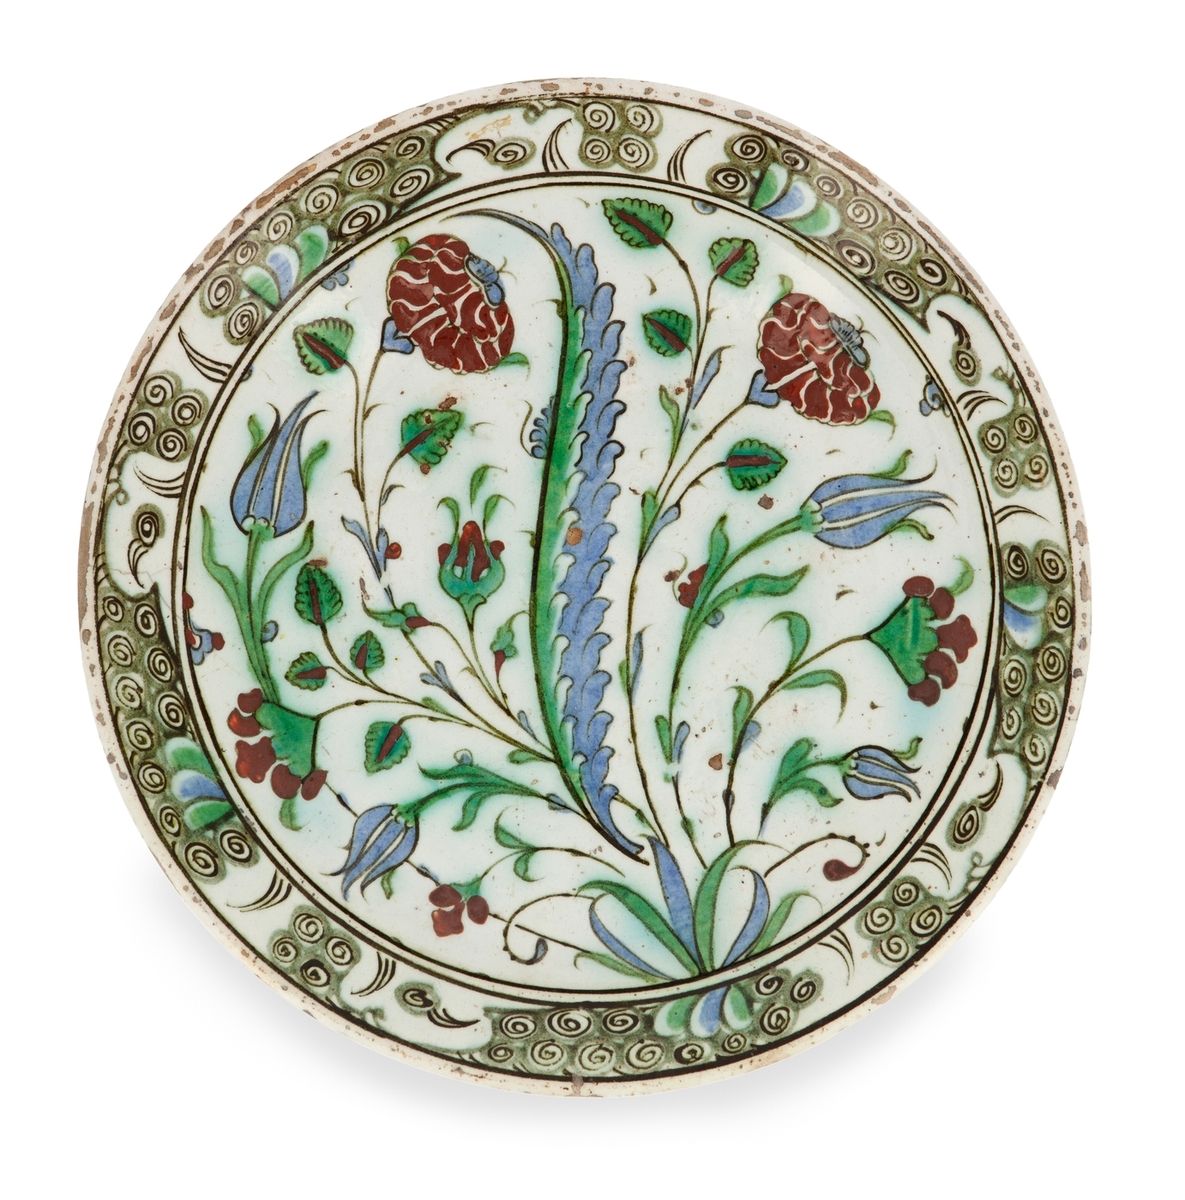 Null Tabak otomano con flores
Iznik, Turquía, Siglo XVII
Plato de cerámica silíc&hellip;